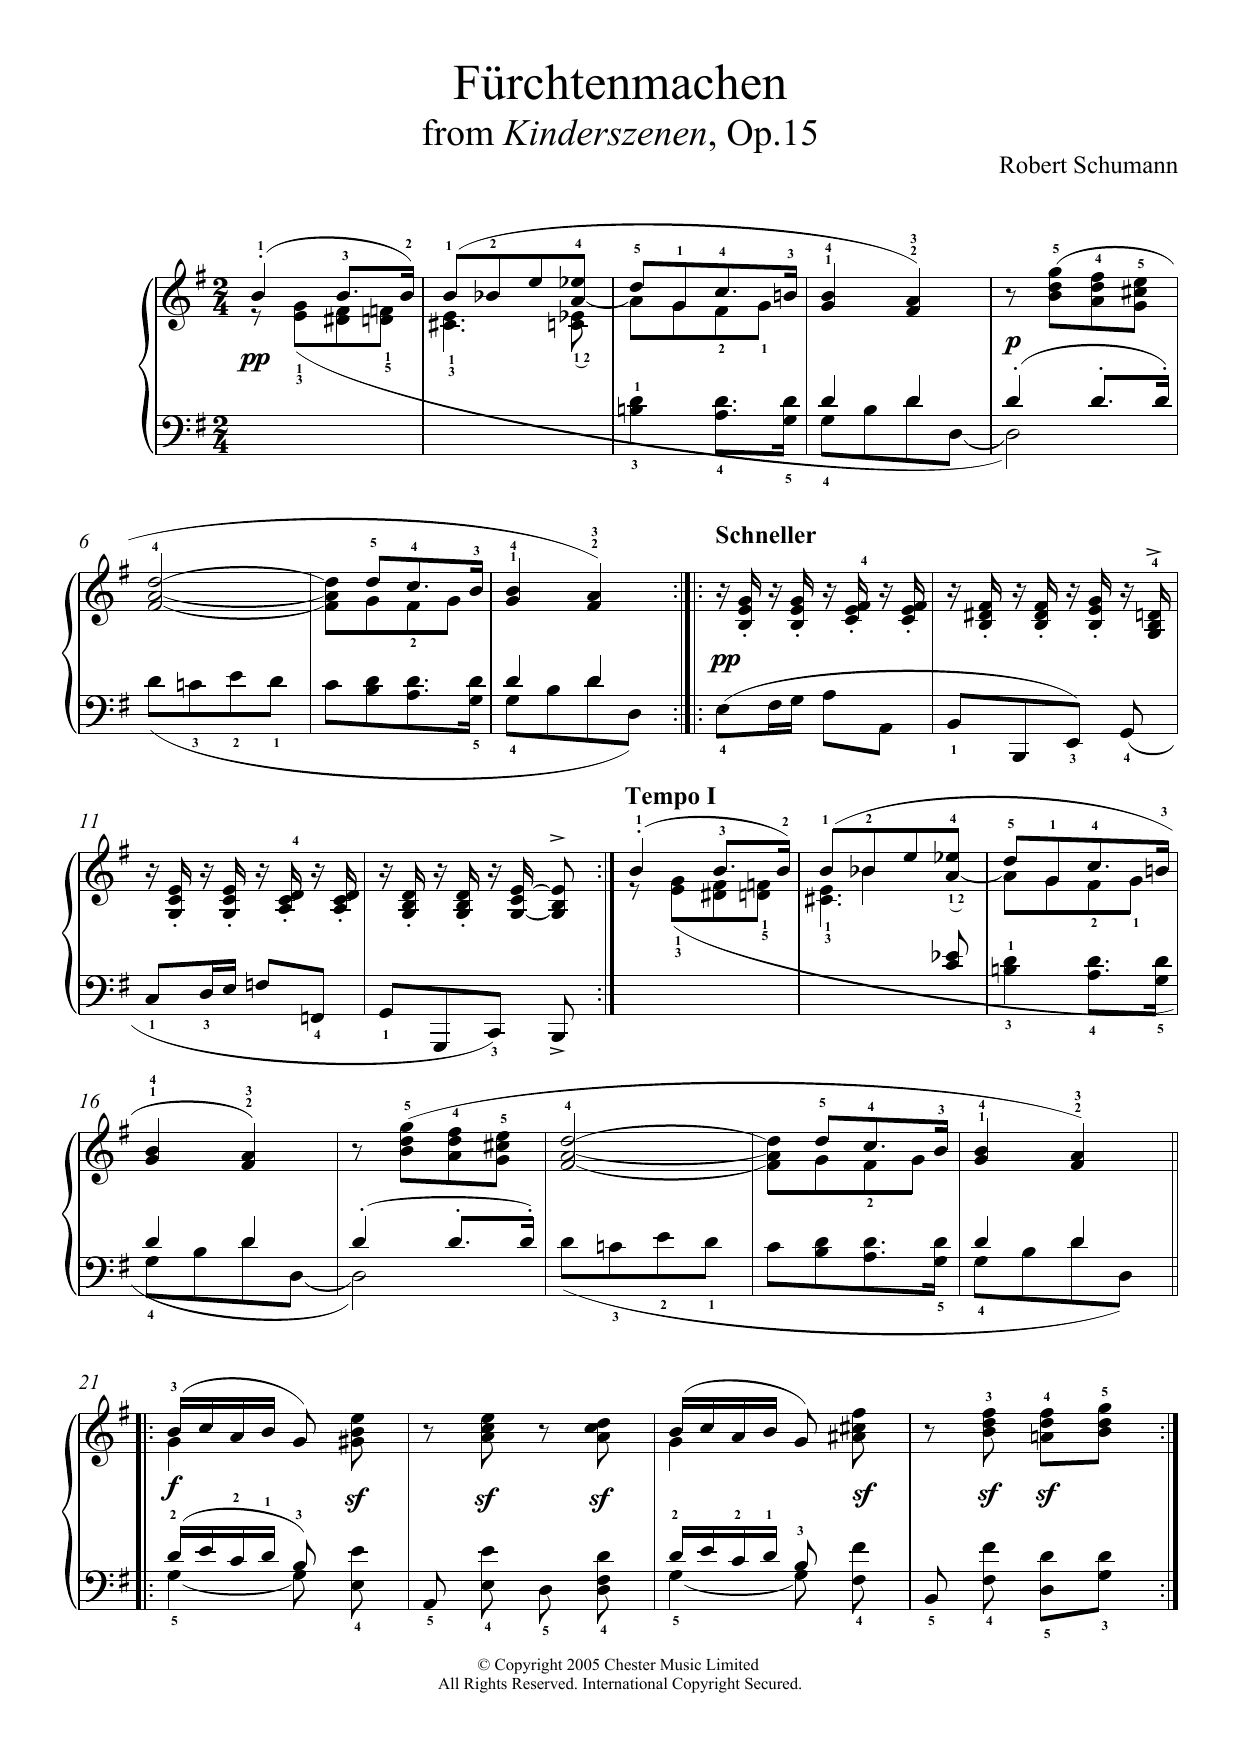 Robert Schumann Furchtenmachen Sheet Music Notes & Chords for Piano - Download or Print PDF